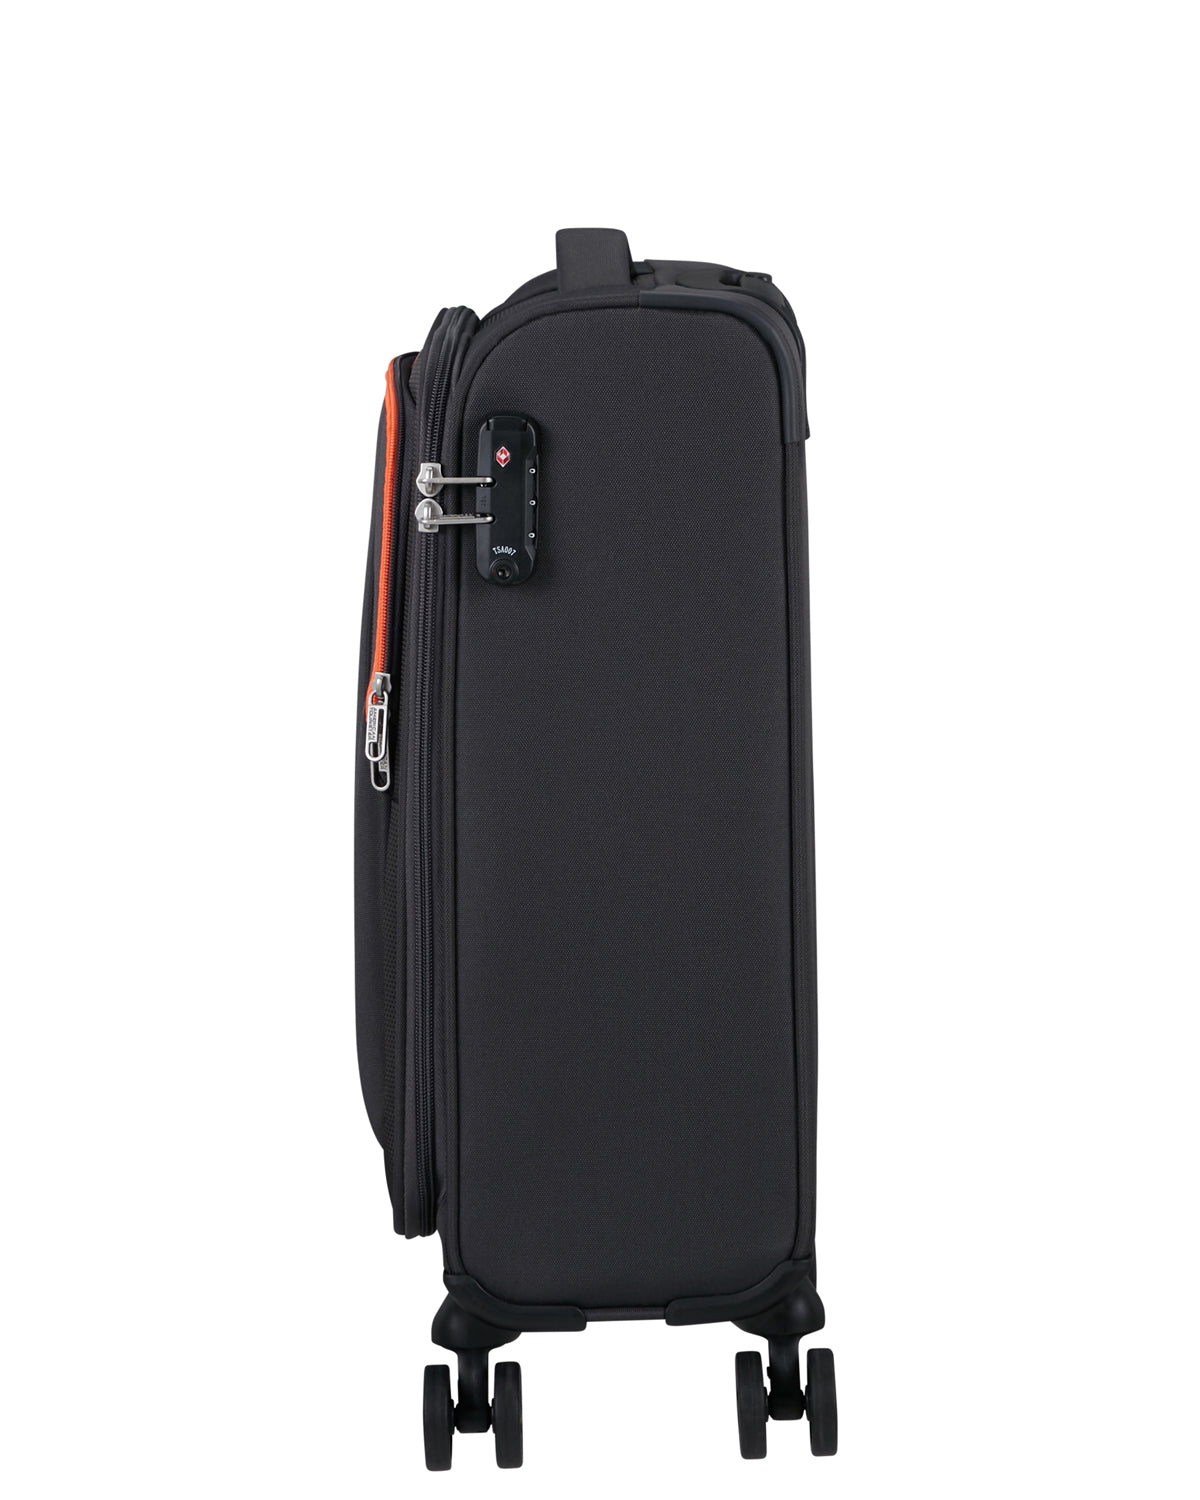 Handbagage koffer 4 wielen 55x40x20cm